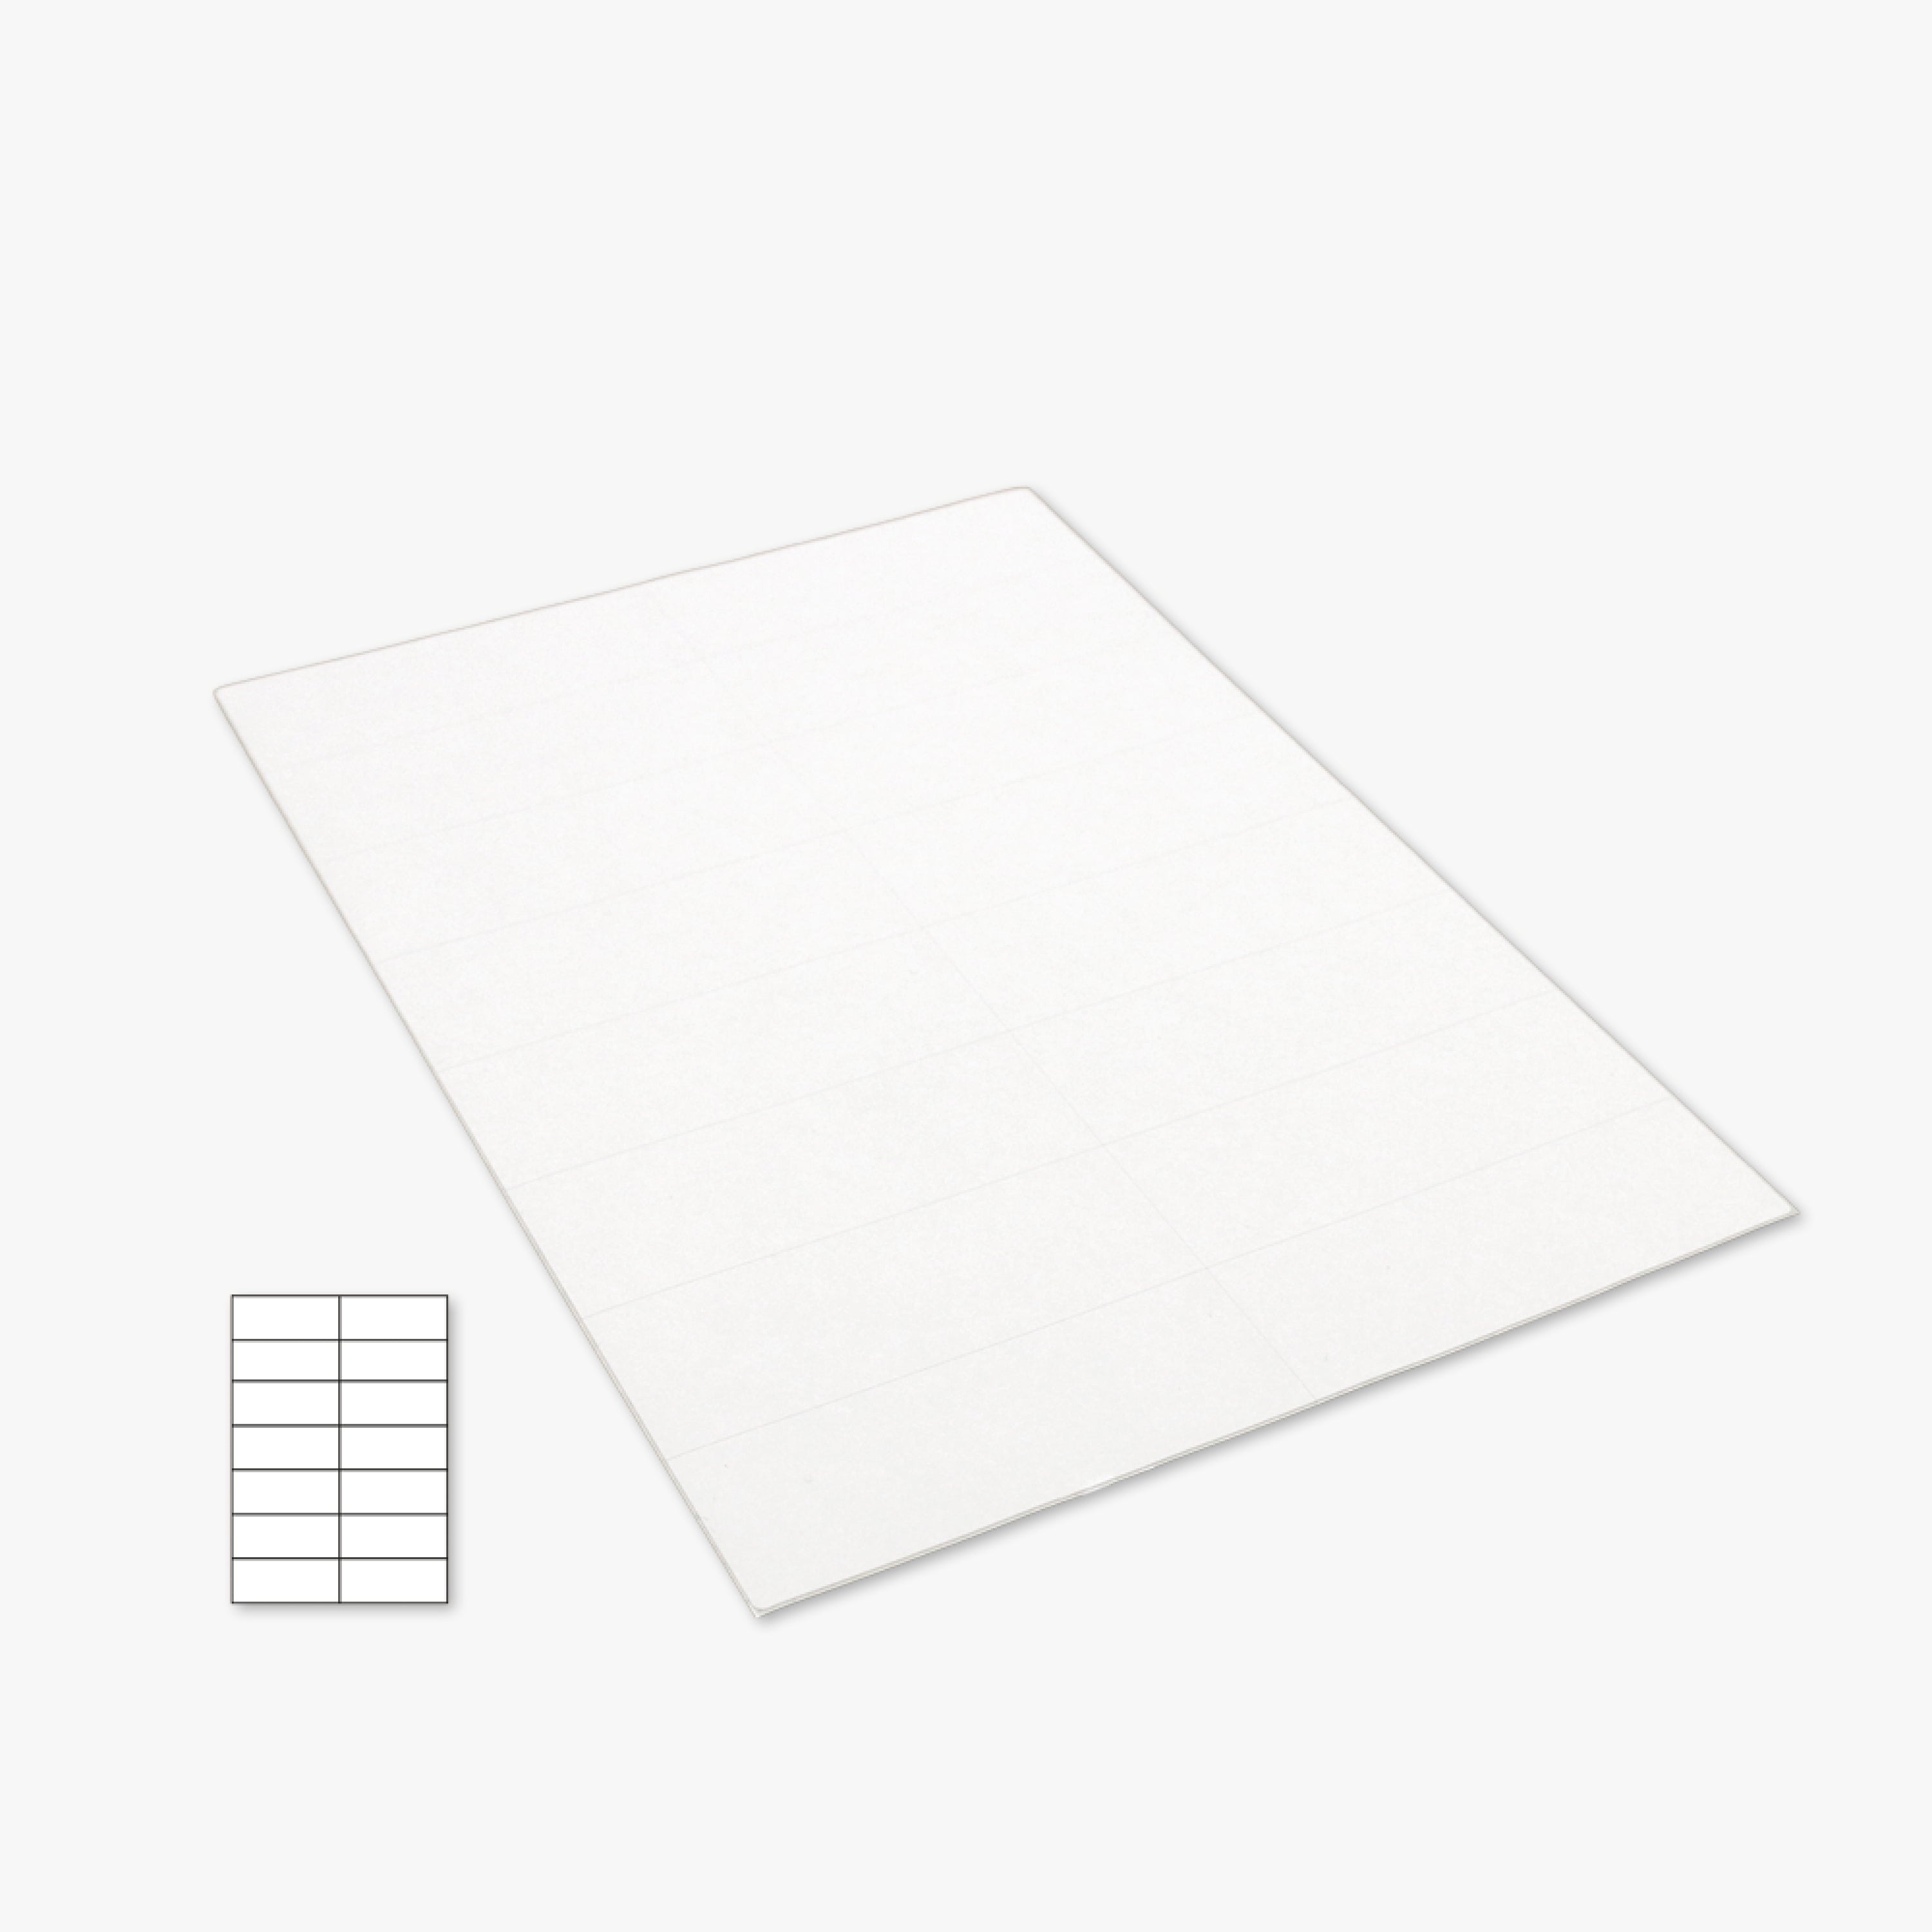 Papieretiketten, DIN A4 Bogen, Einzelformat 105 x 37 mm, 16 Etiketten pro Bogen, permanent haftend